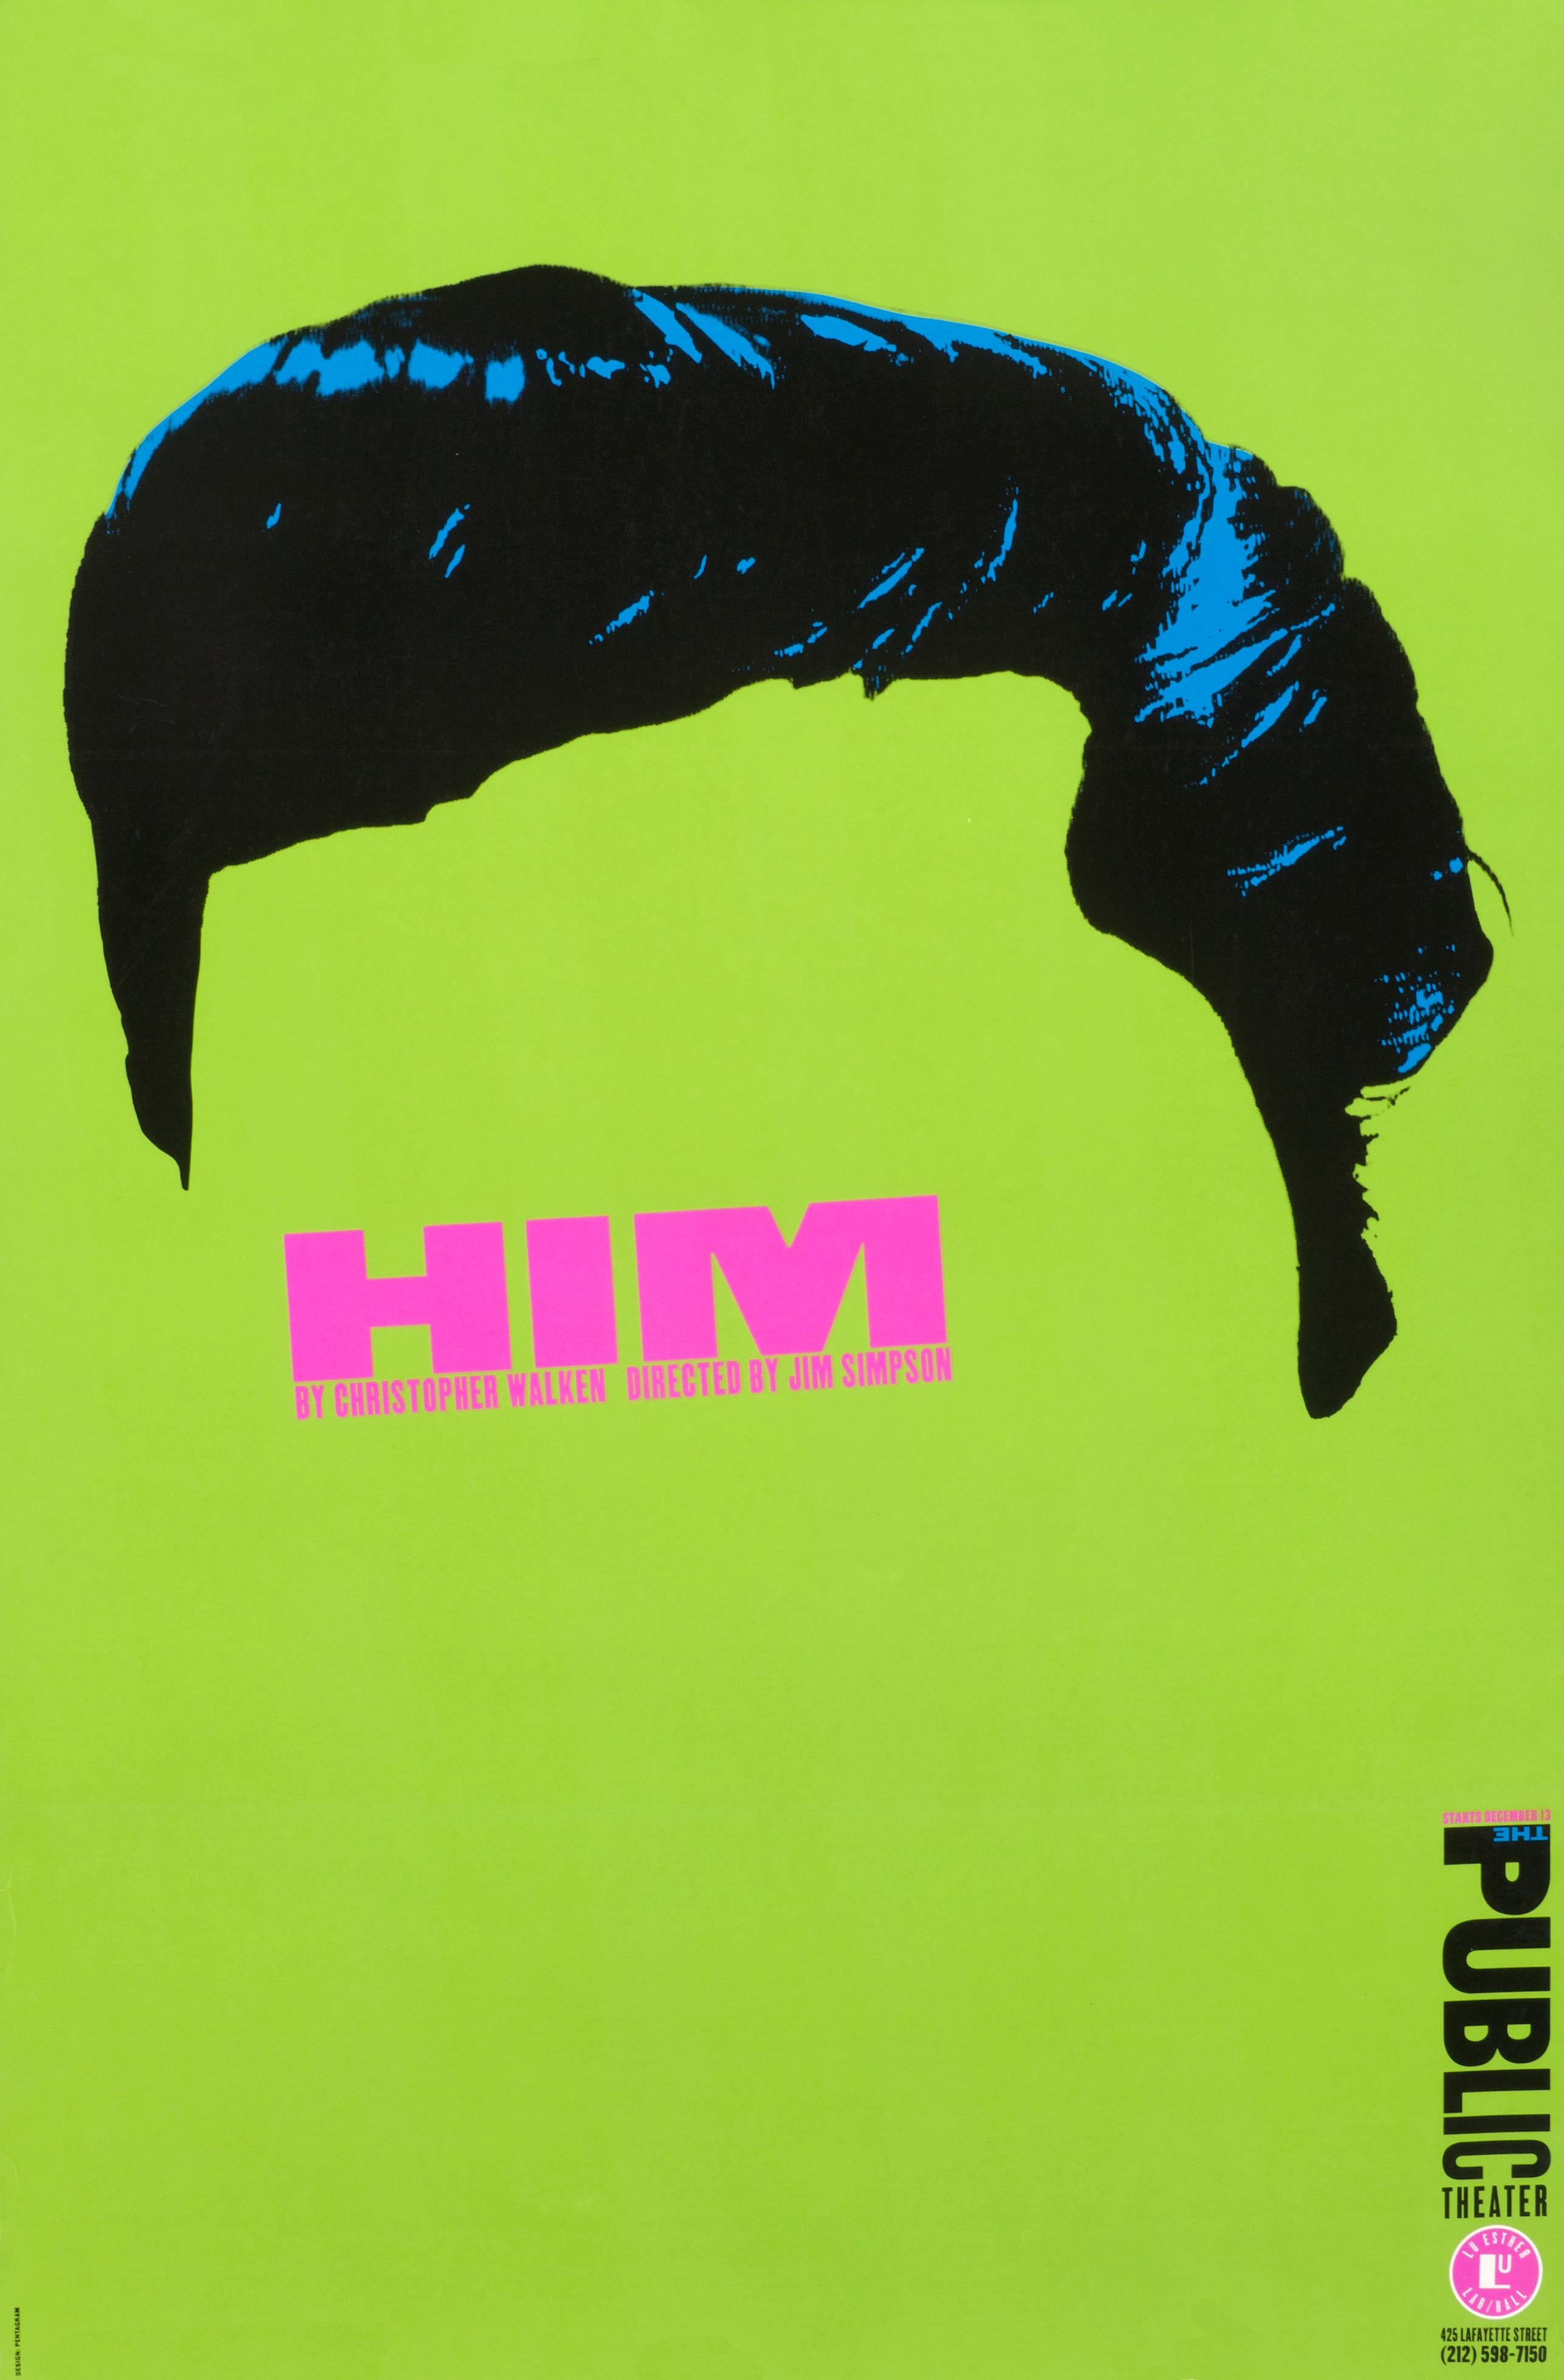 "Him by Christopher Walken - Public Theater" Original Elvis Poster - Print by Paula Scher